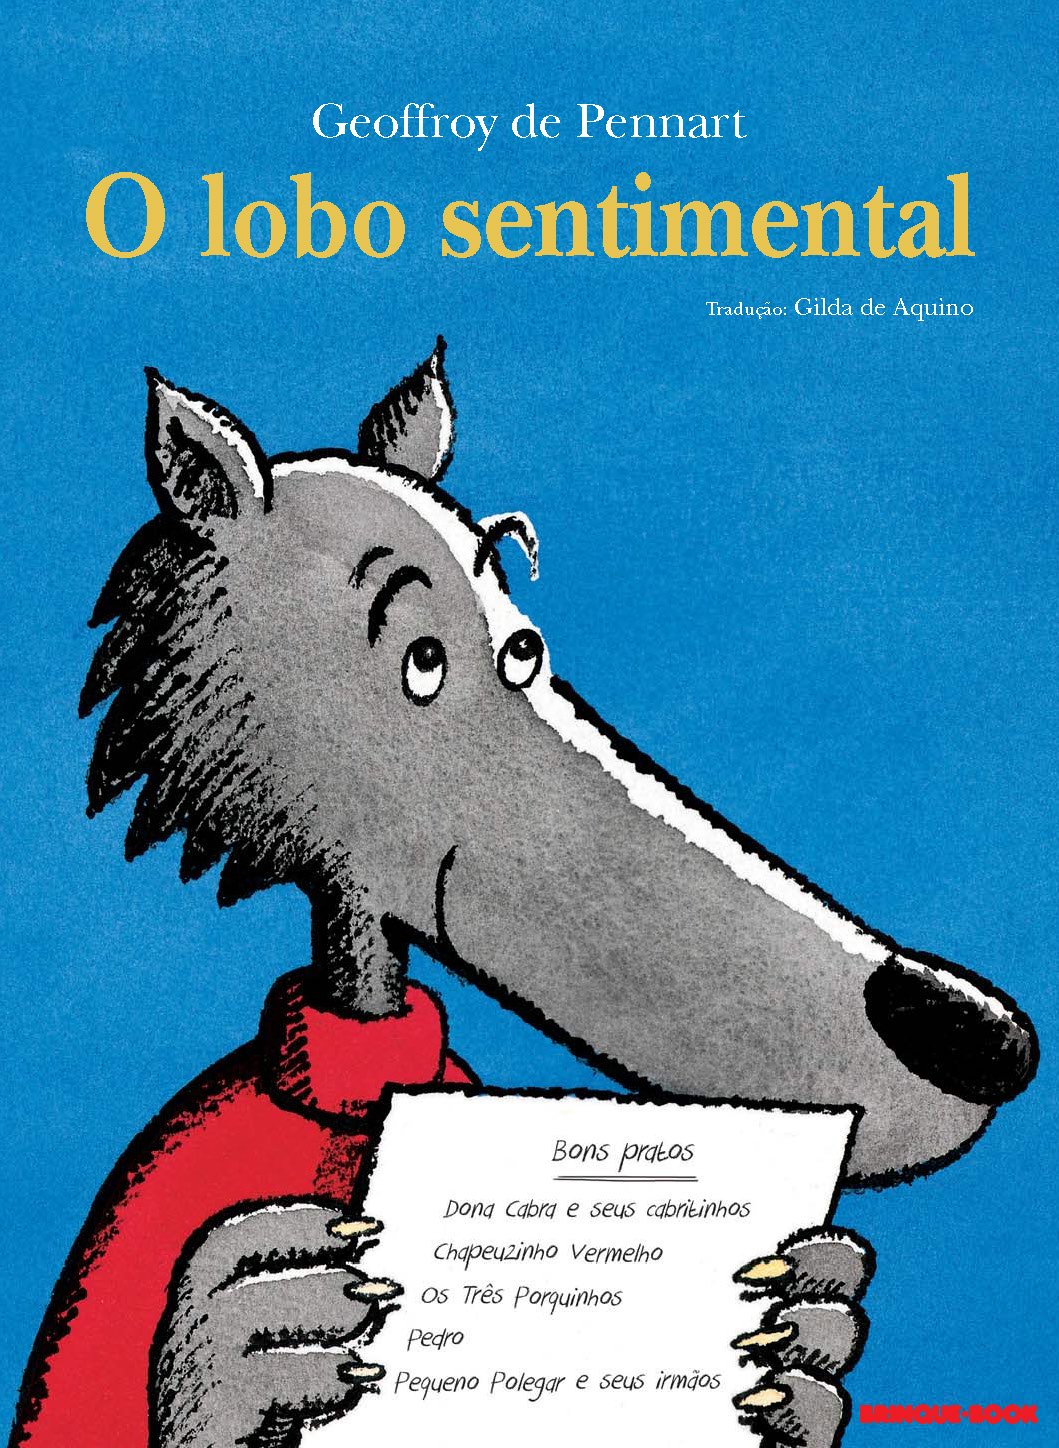 capa livro O lobo sentimental, autor(a) Geoffroy de Pennart